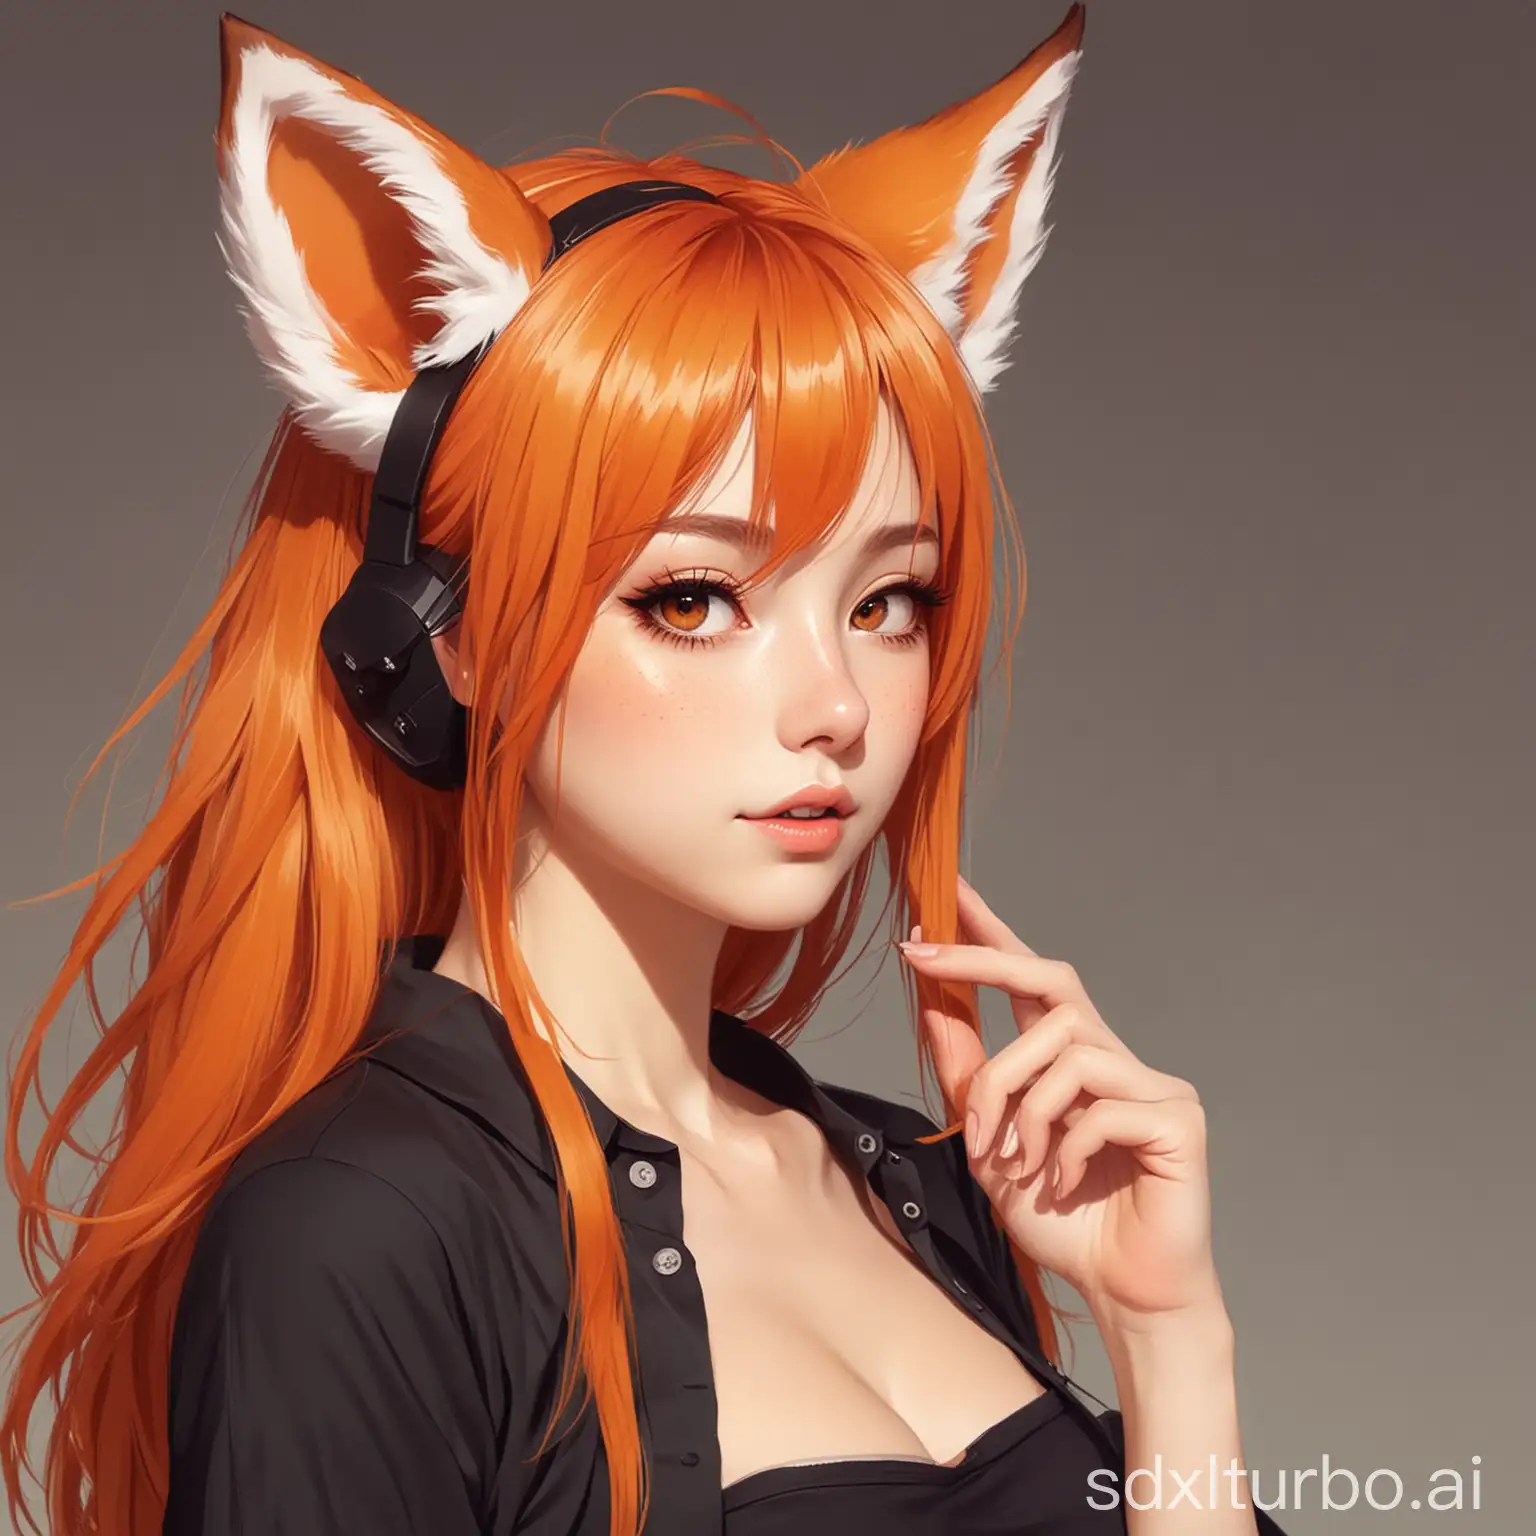 woman, art, fox ears, orange hair, anime